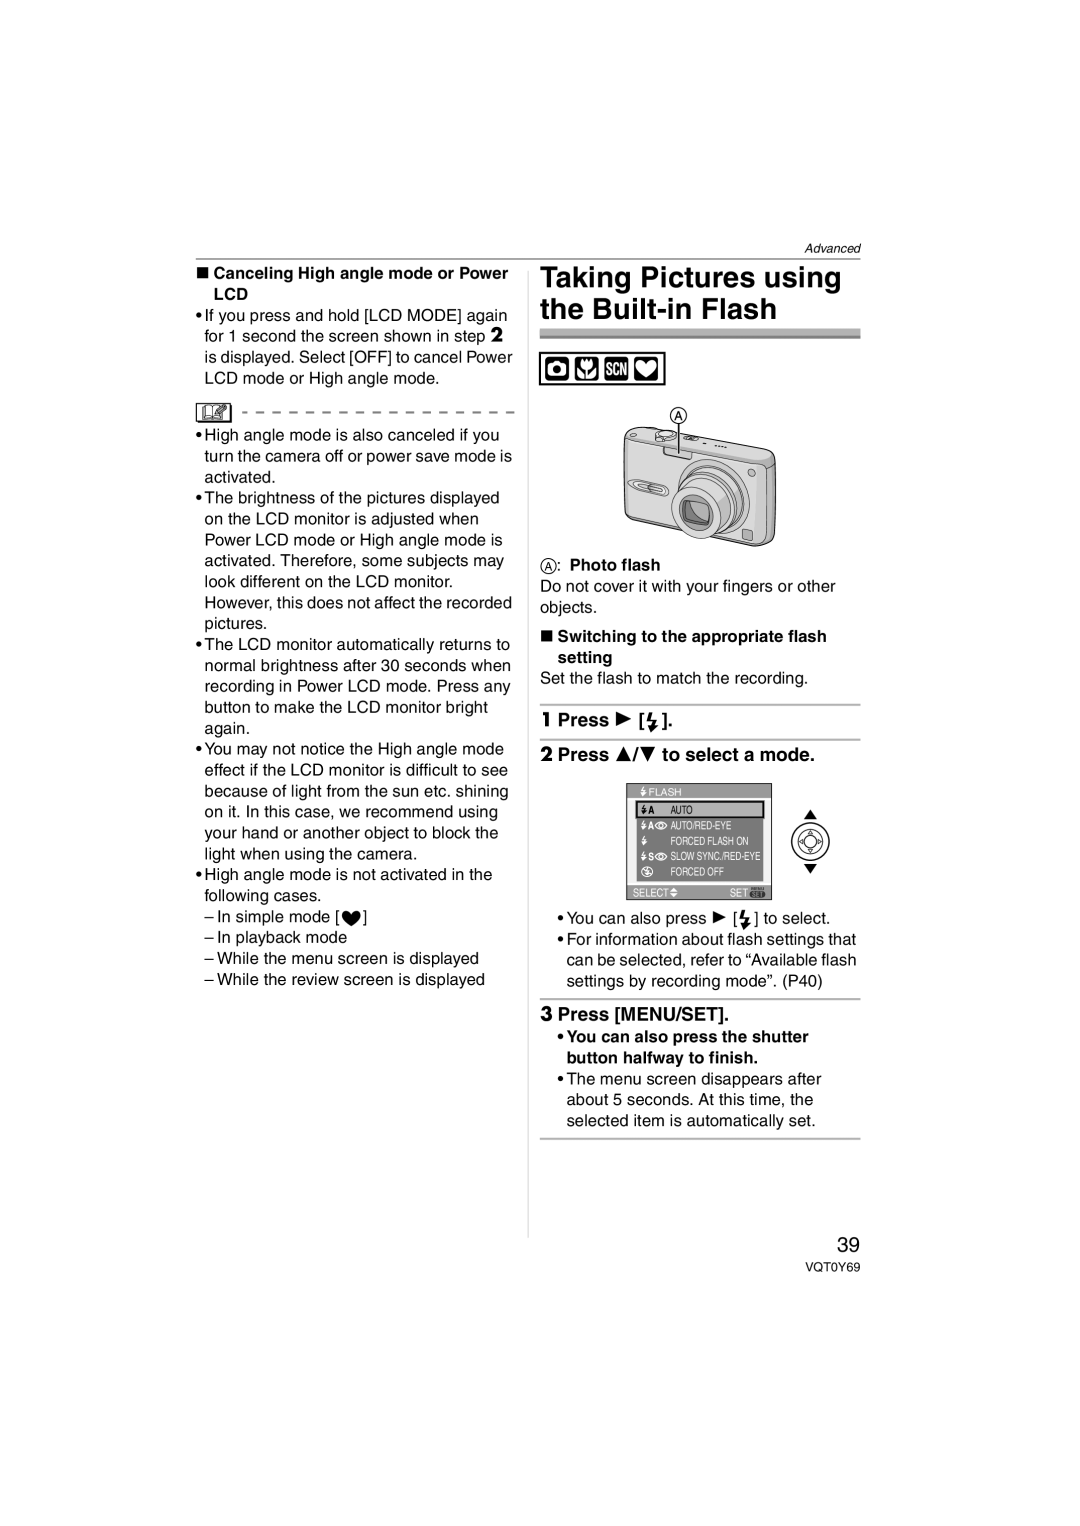 Panasonic DMC-FX3, DMC-FX07 Taking Pictures using the Built-in Flash, Press 2 Press 3/4 to select a mode, Press MENU/SET 